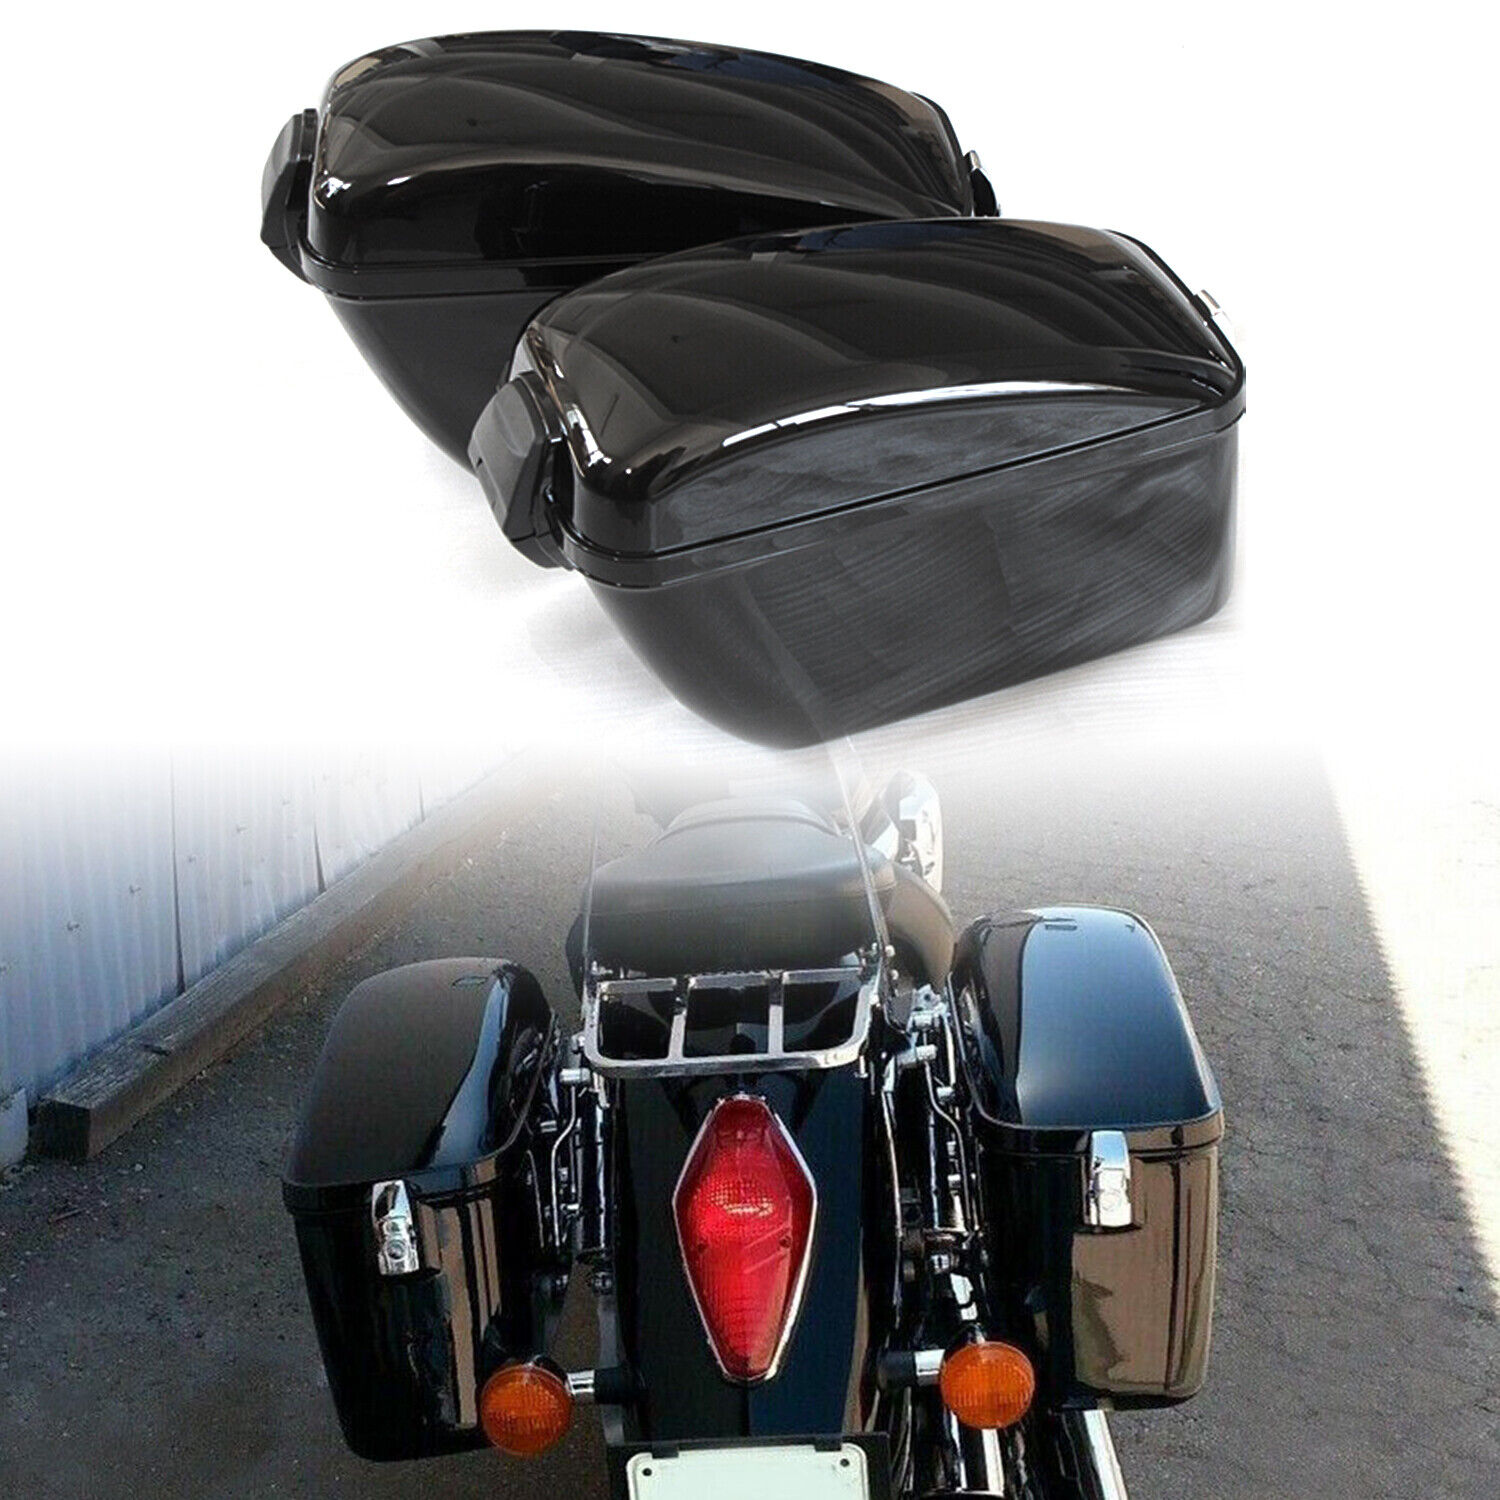 Black Motorcycle Hard Saddle Bags For Harley Dyna Electra Glide Honda Shadow